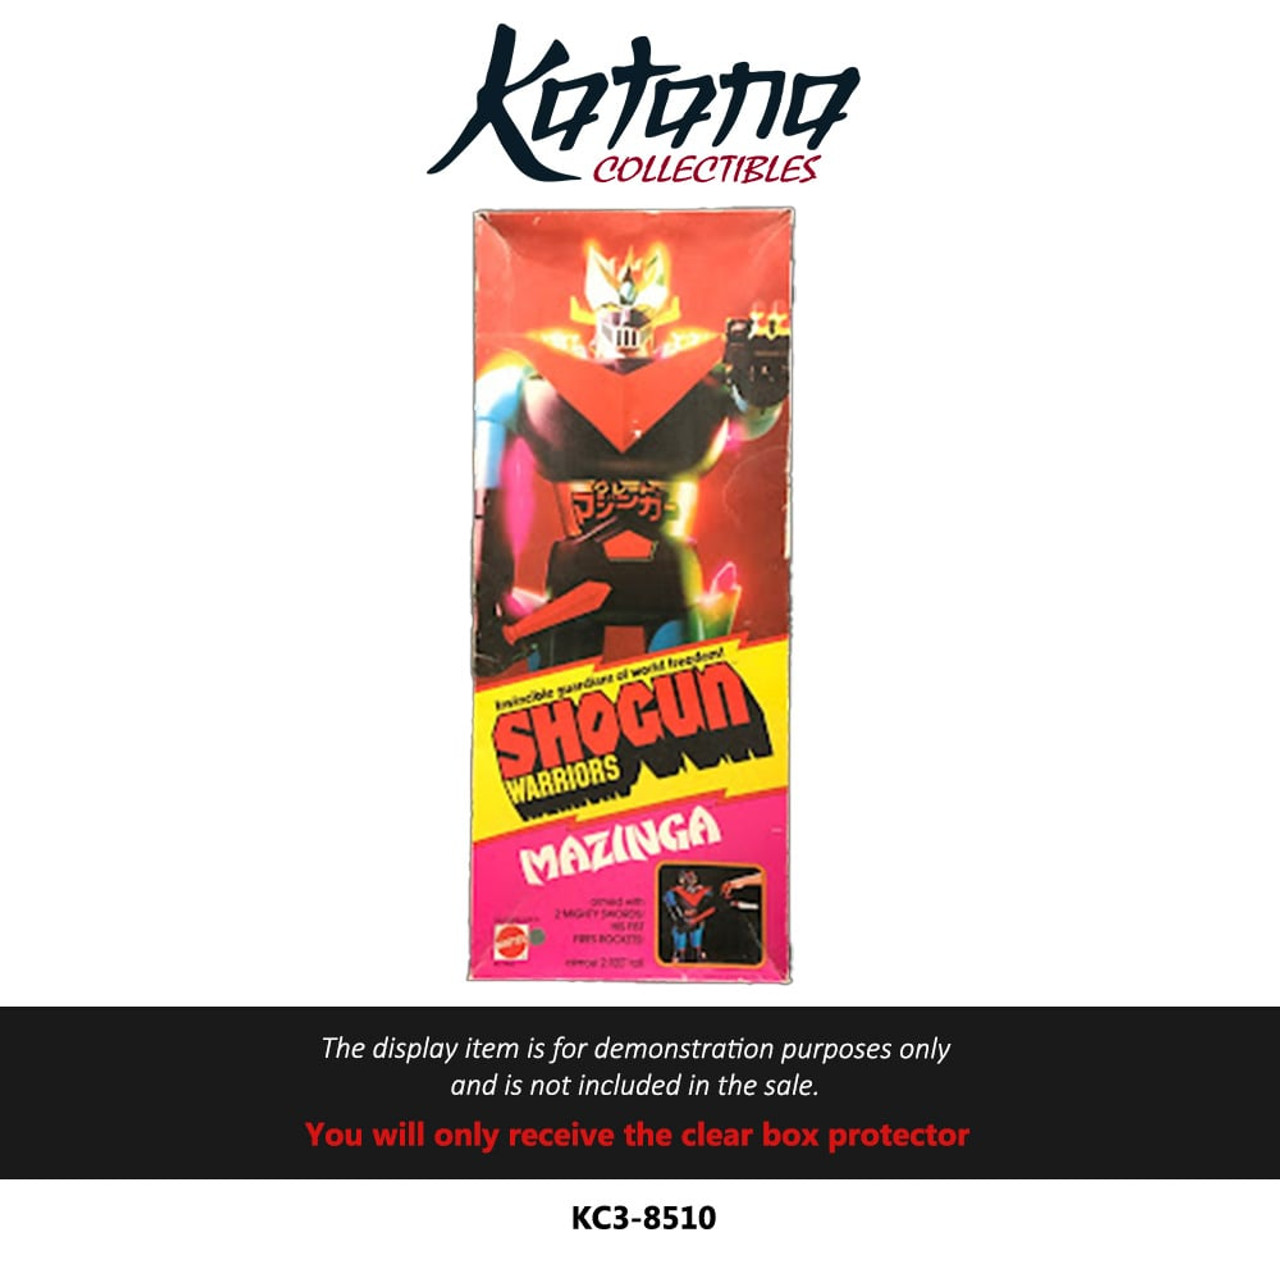 Katana Collectibles Protector For 1977 Shogun Warriors Mazinga